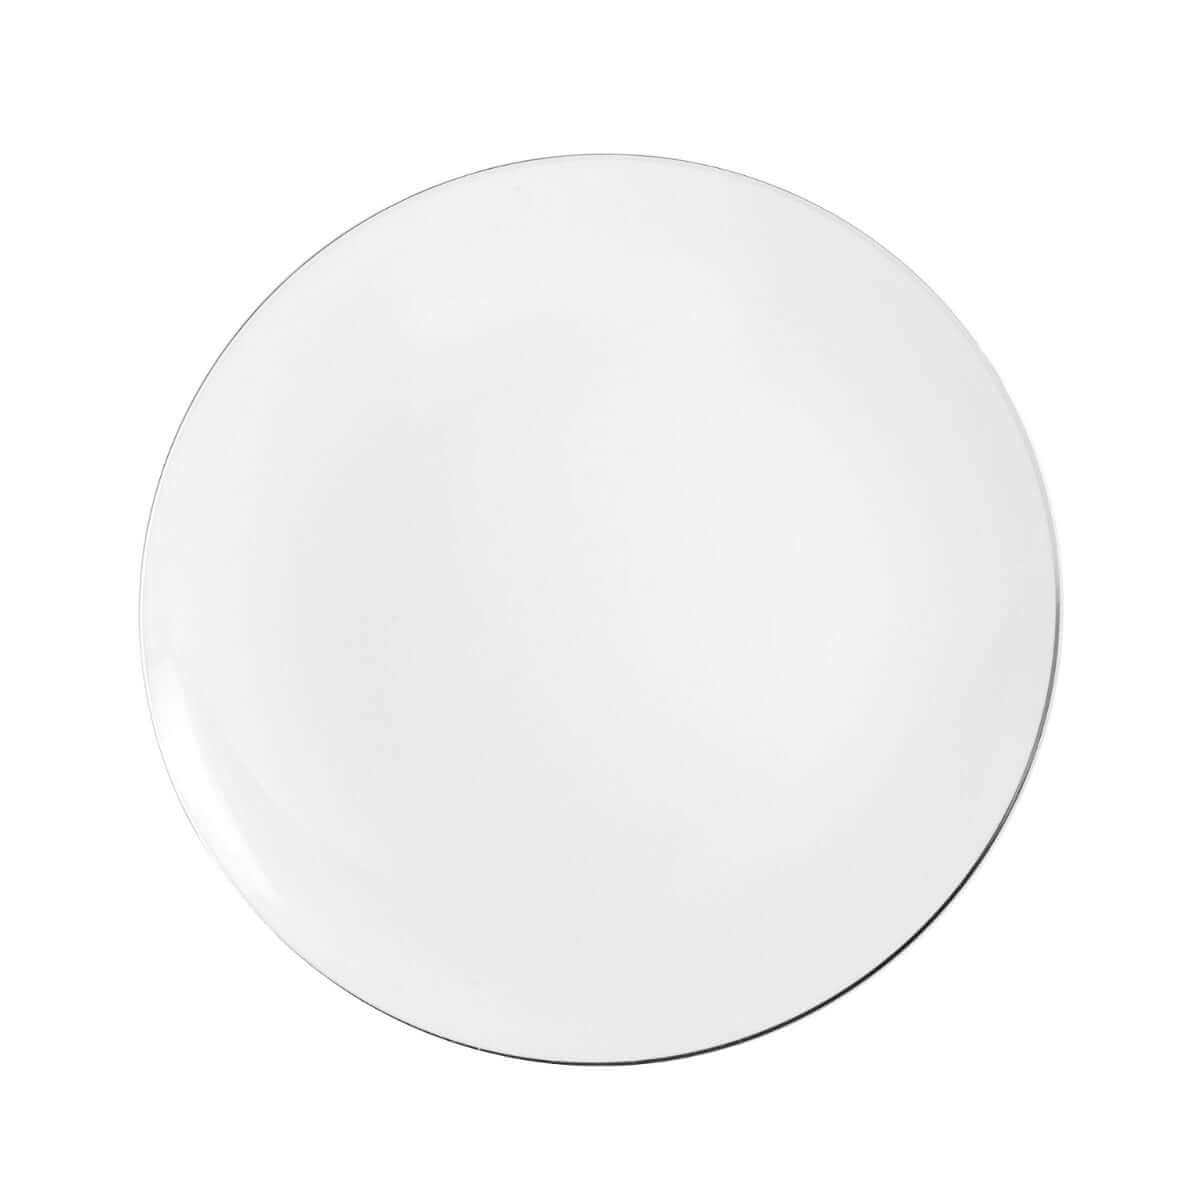 10" Classic Silver Design Plastic Plates (120 Count) - Yom Tov Settings